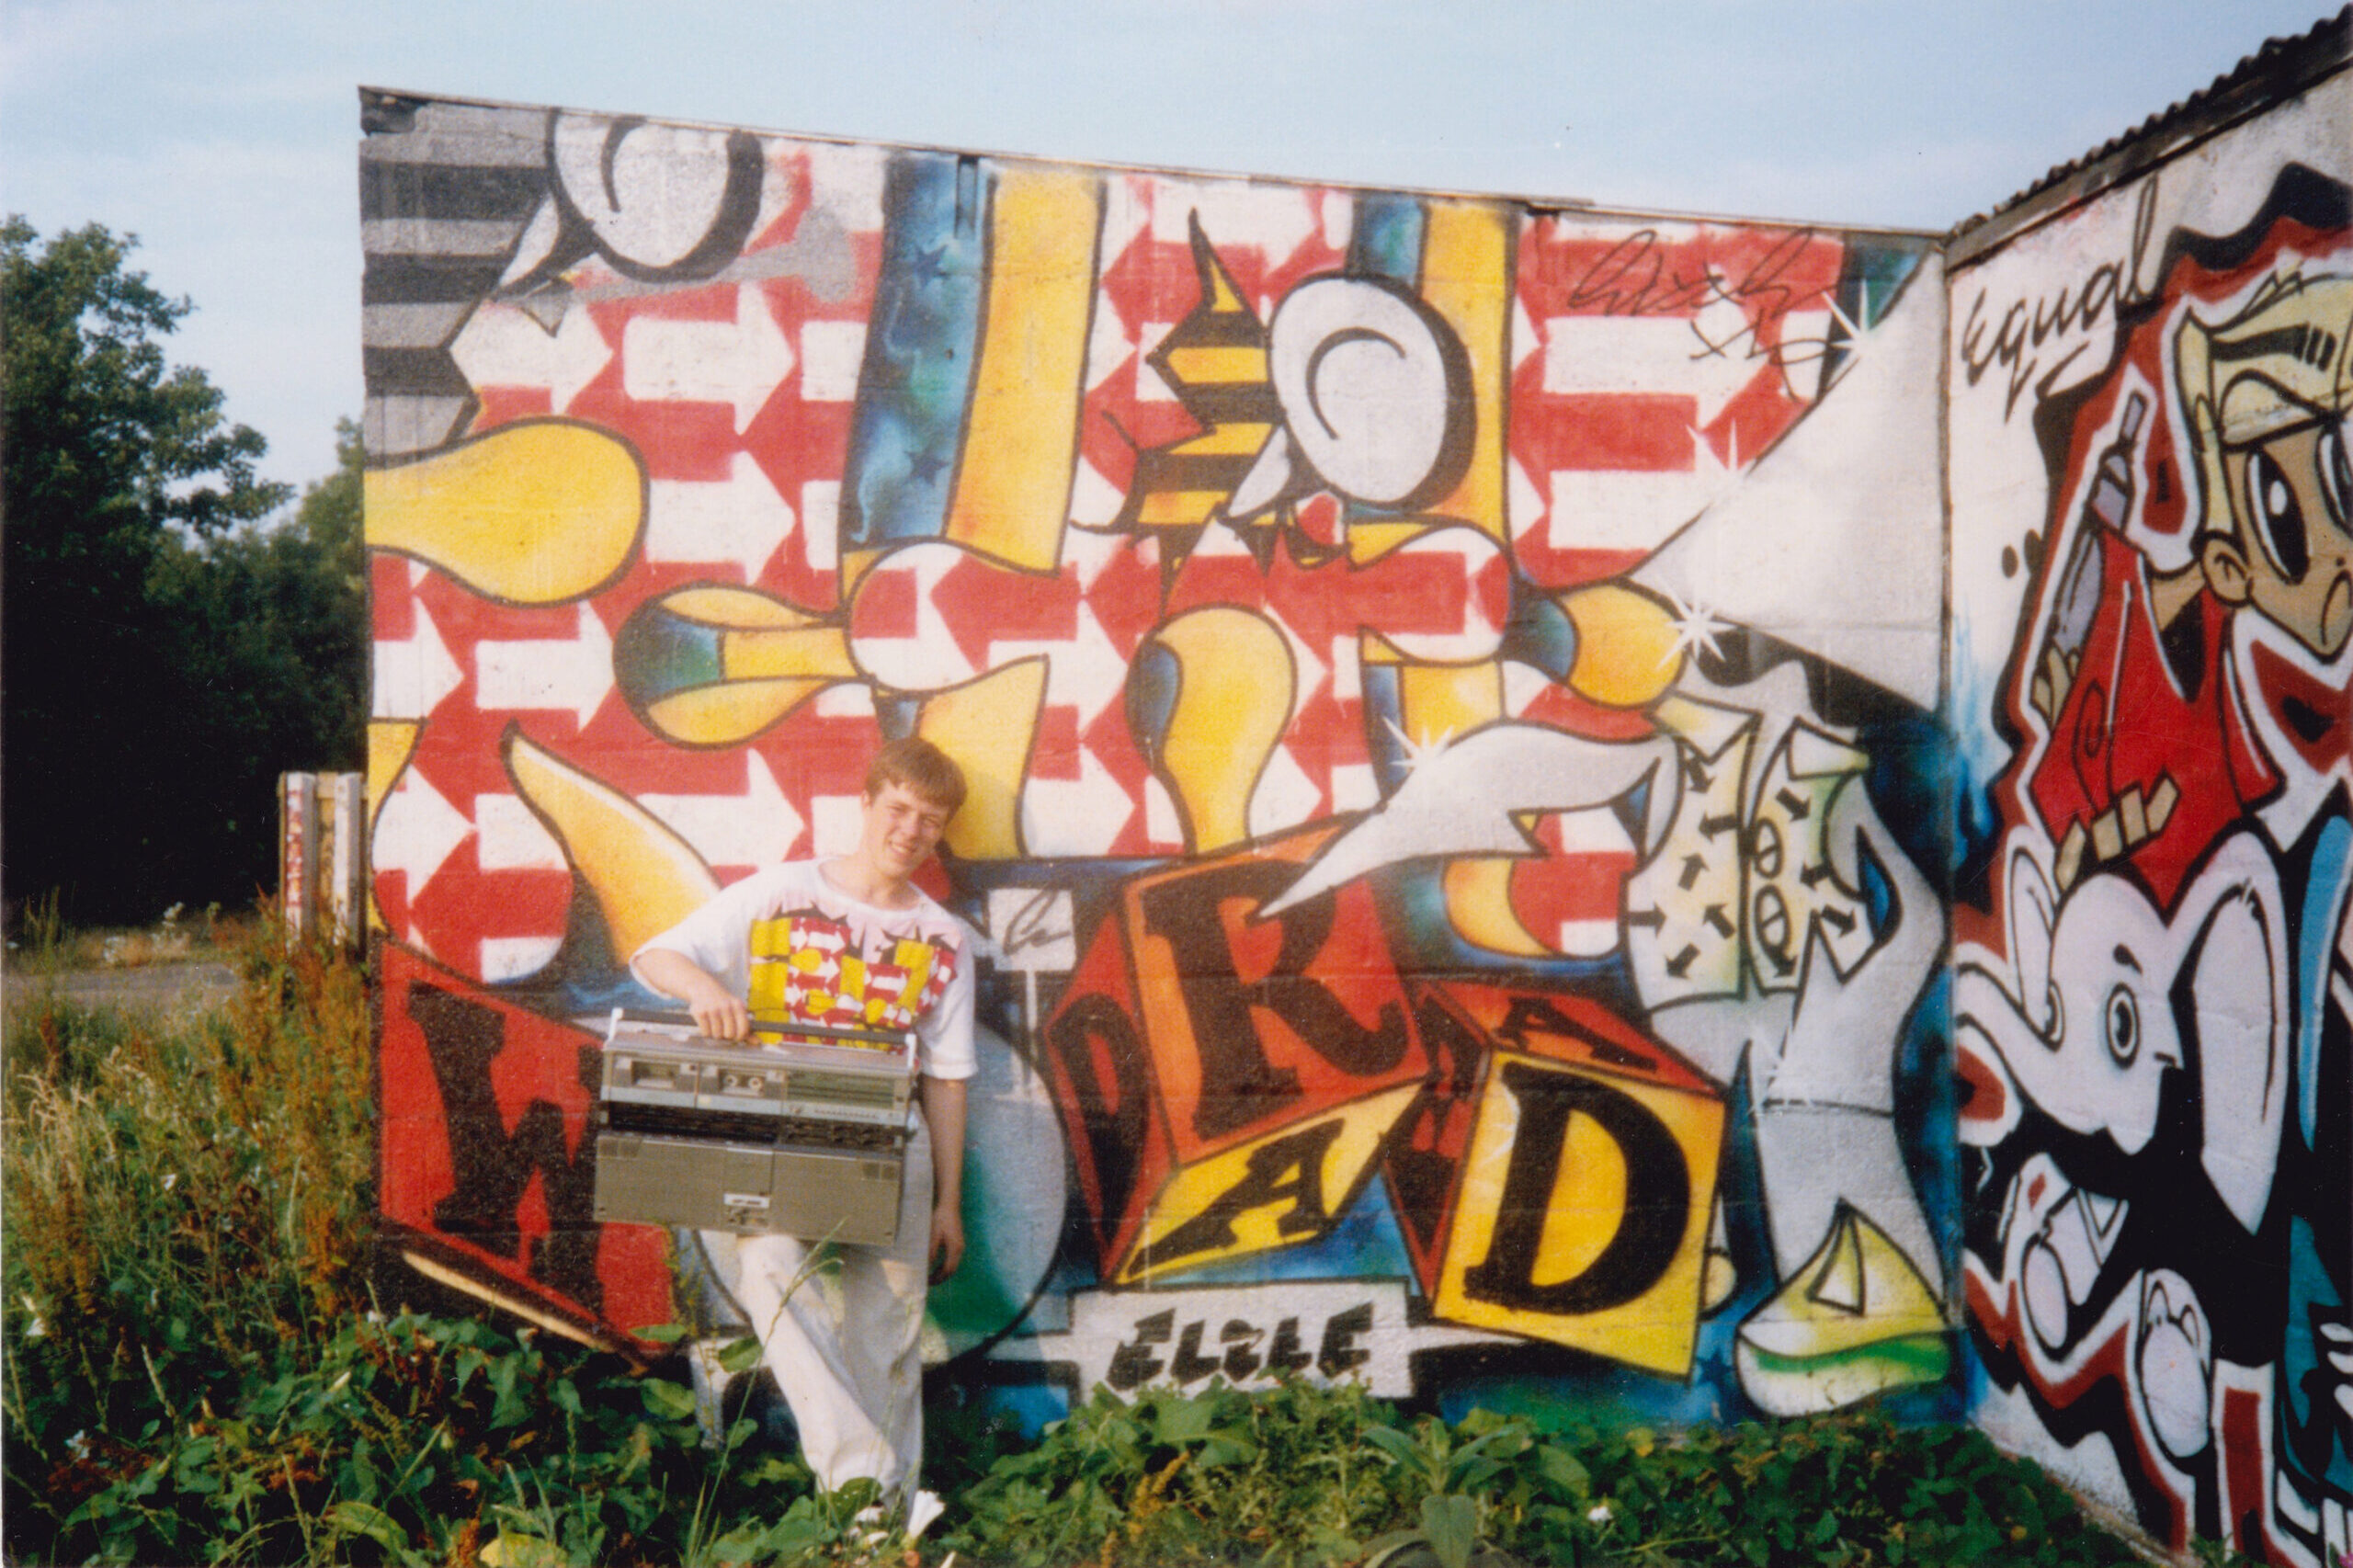 Live Like Legends: Celebrating Four Decades of Hull’s Street Art and Graffiti Scene